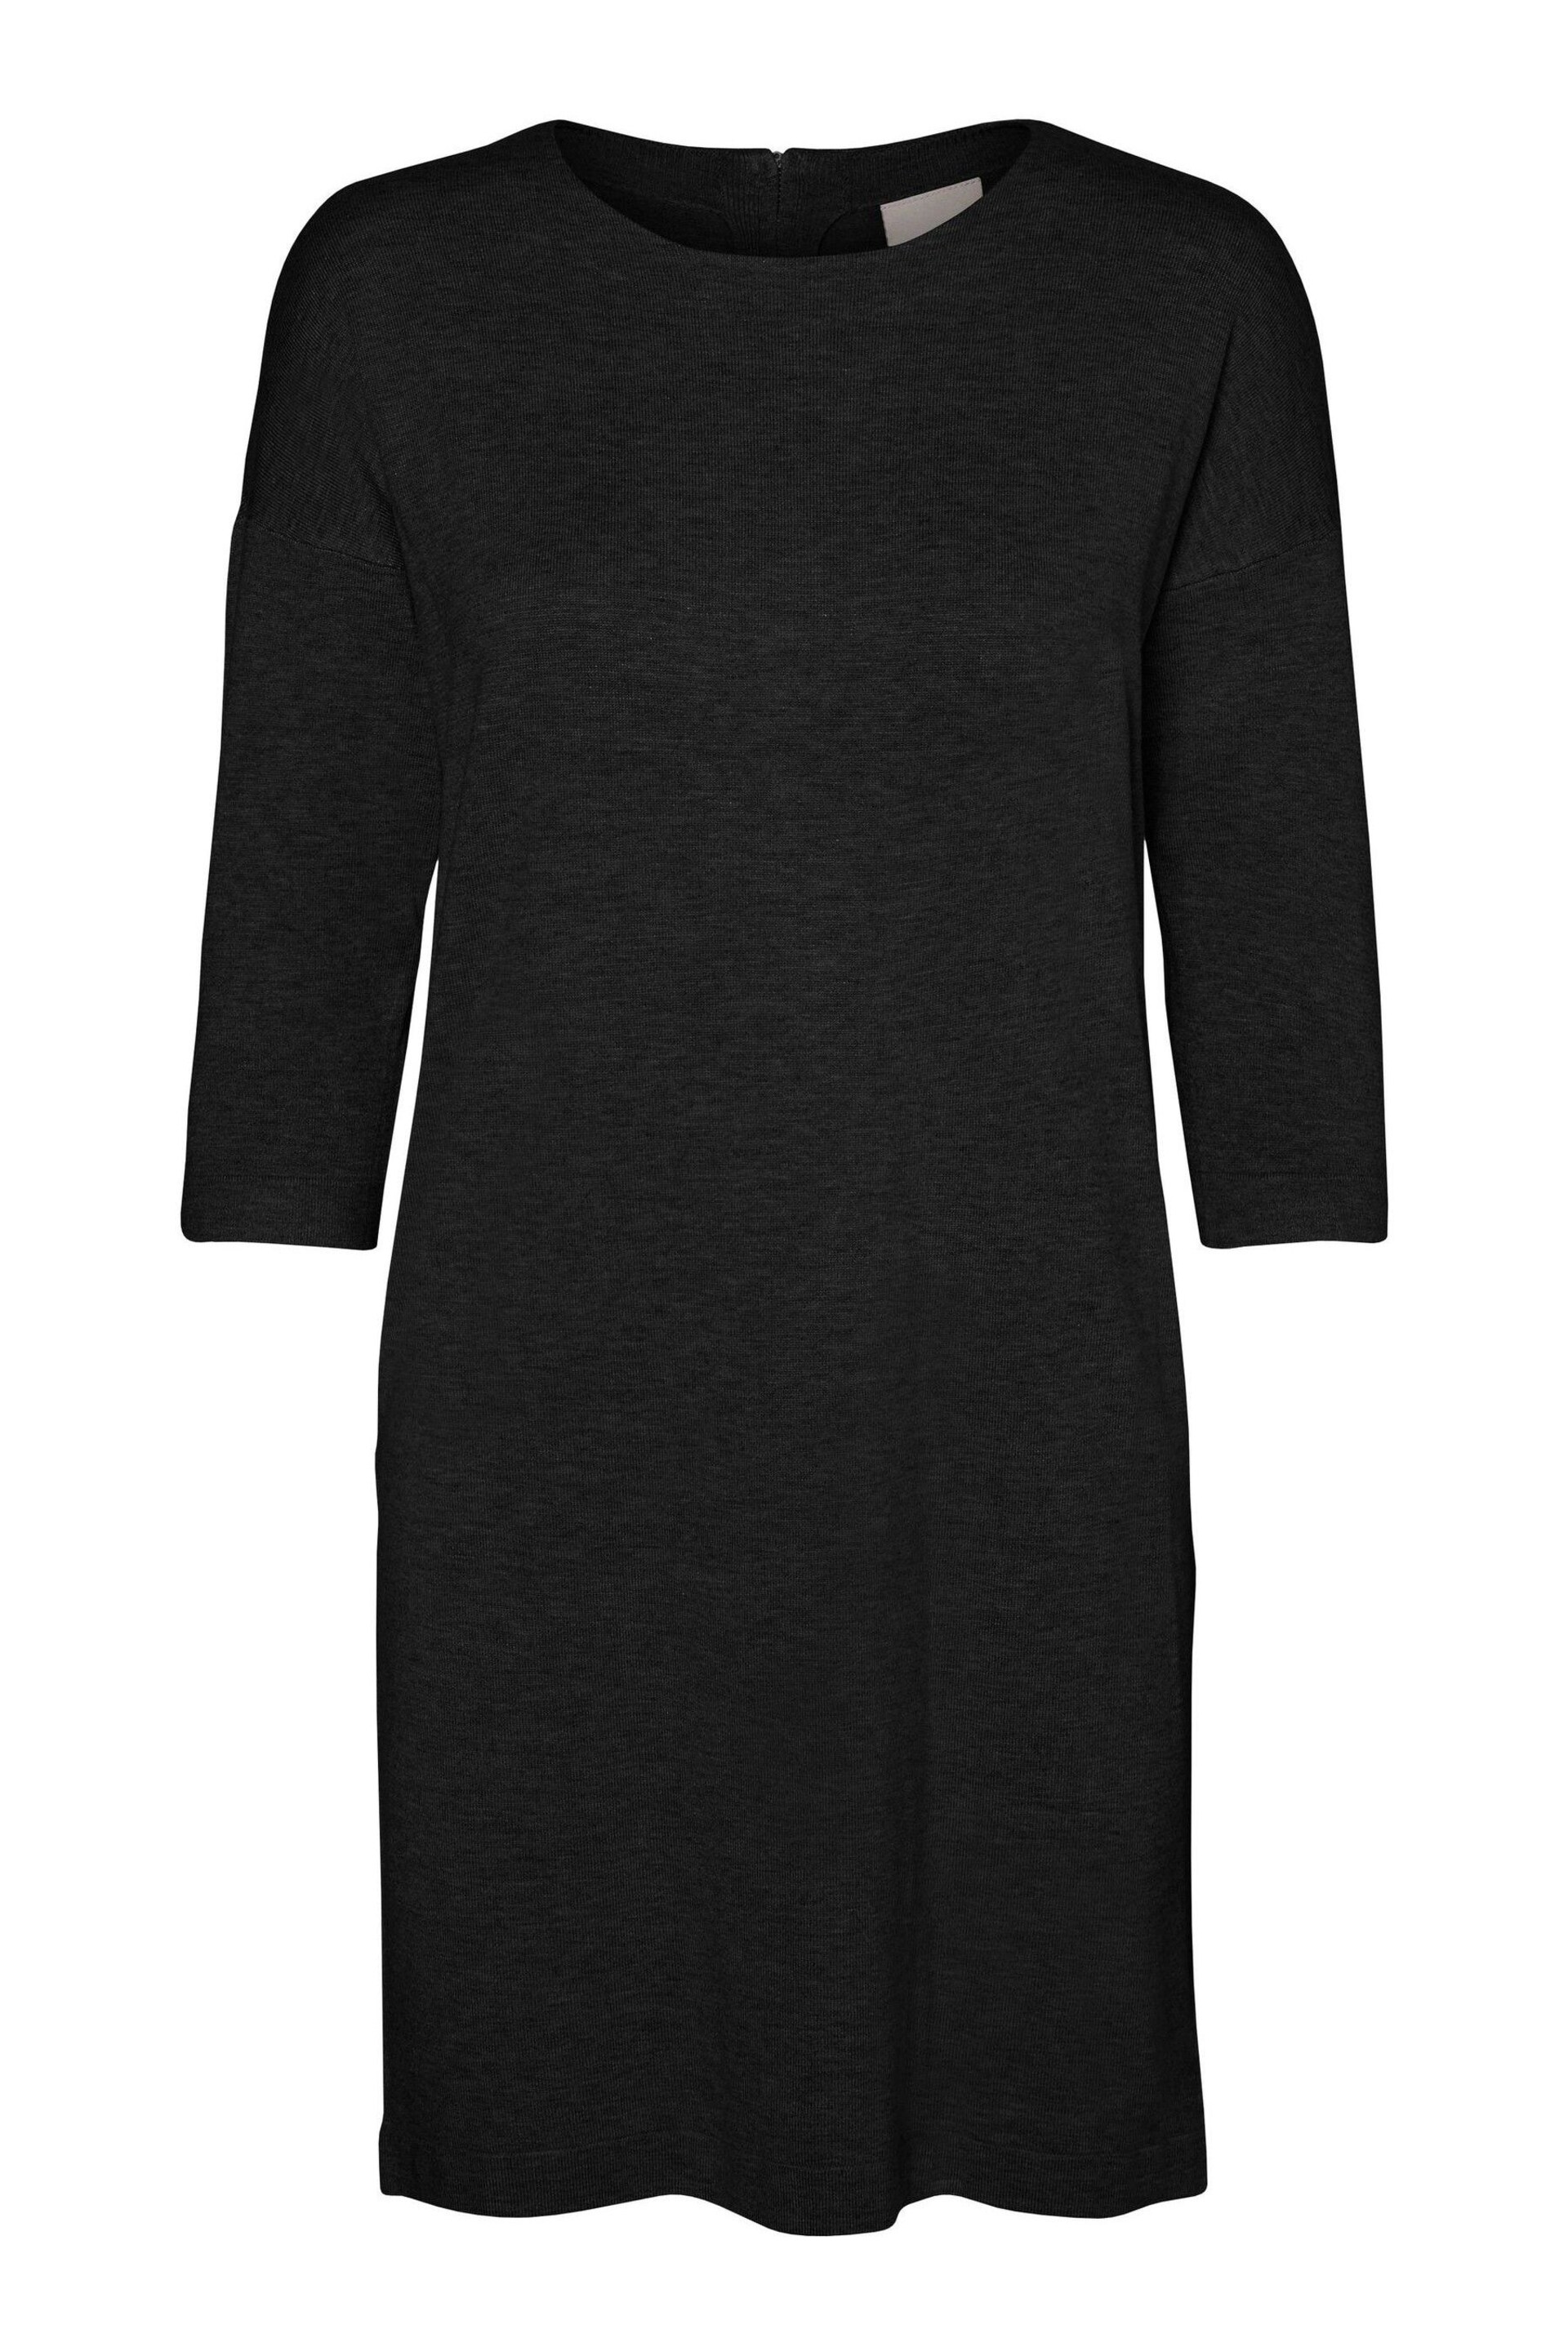 VERO MODA Black 3/4 Sleeve Knitted Dress - Image 5 of 5